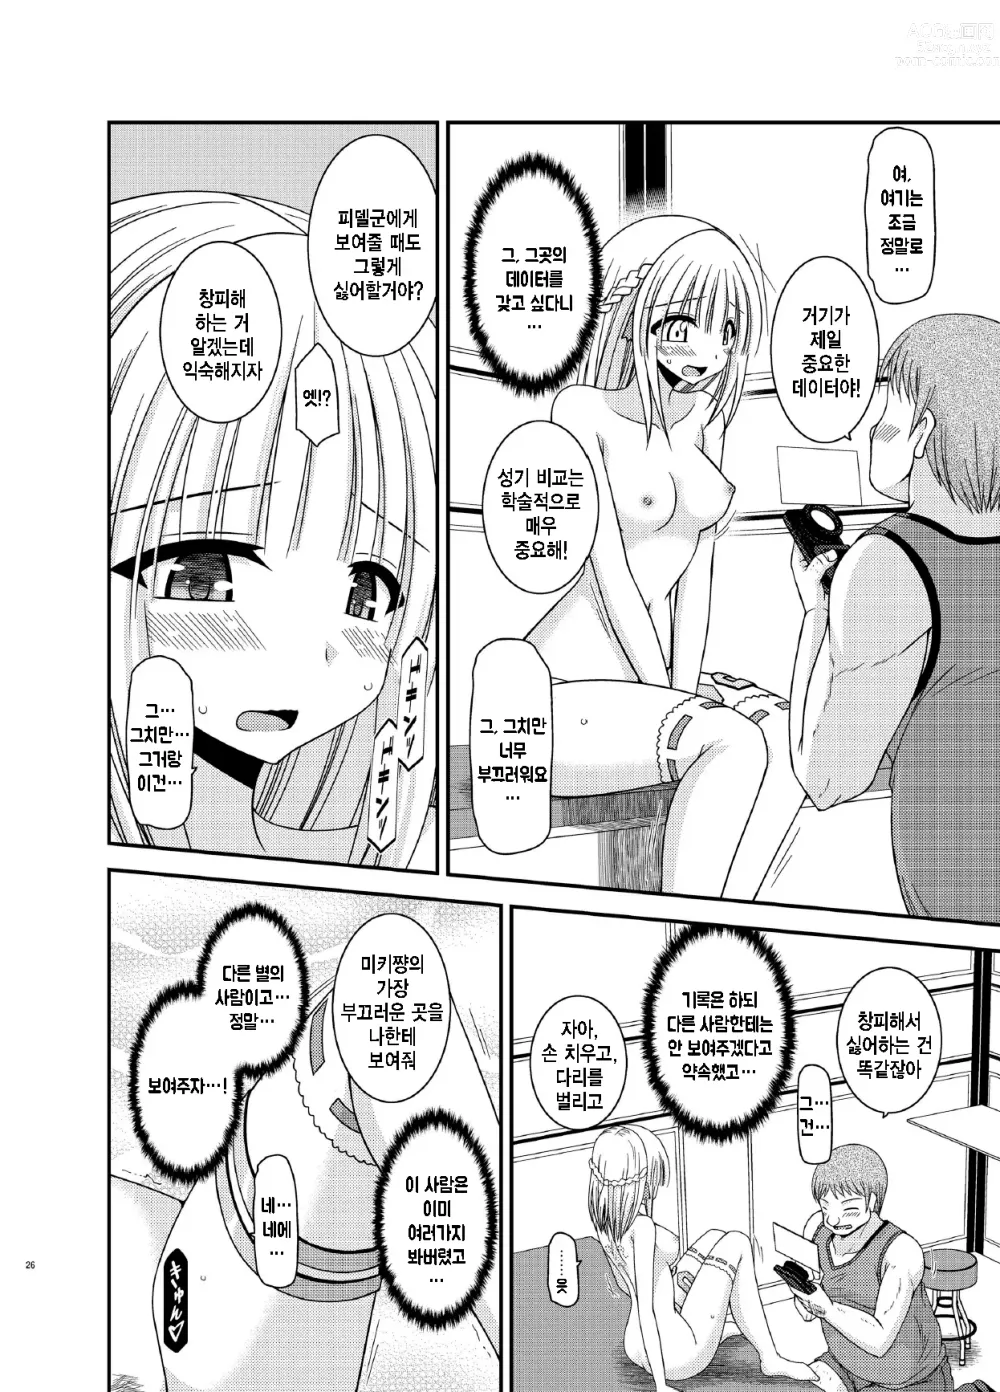 Page 25 of doujinshi Iseijin to no Sex wa No Count dakara...